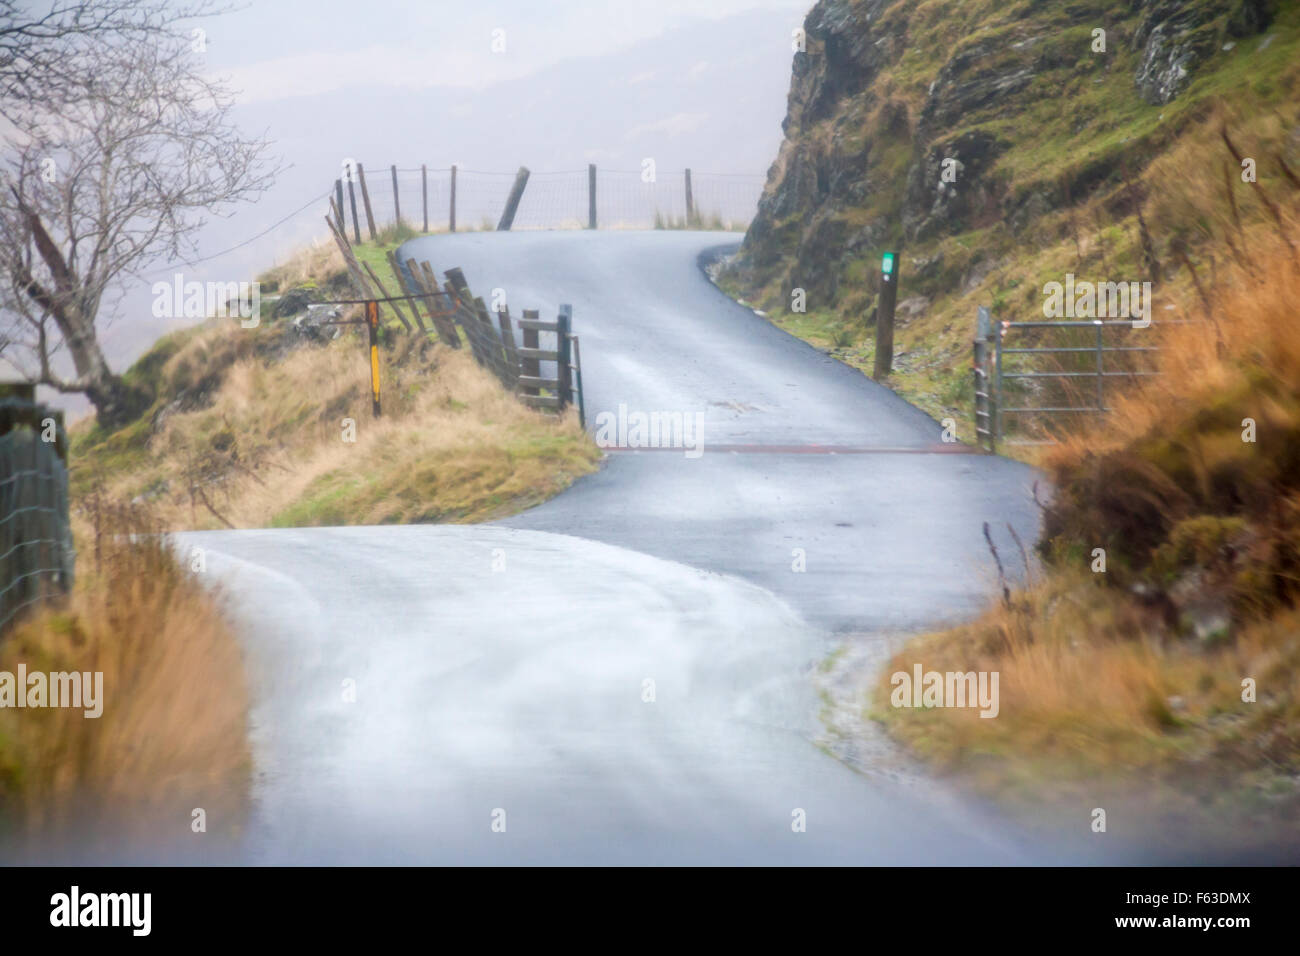 Blick aus dem Auto Windschutzscheibe Fahren entlang Tregaron Mountain Road, Mid Wales UK im Herbst - Entscheidung Zeit Konzept nach oben oder unten, links oder rechts Auswahl Stockfoto